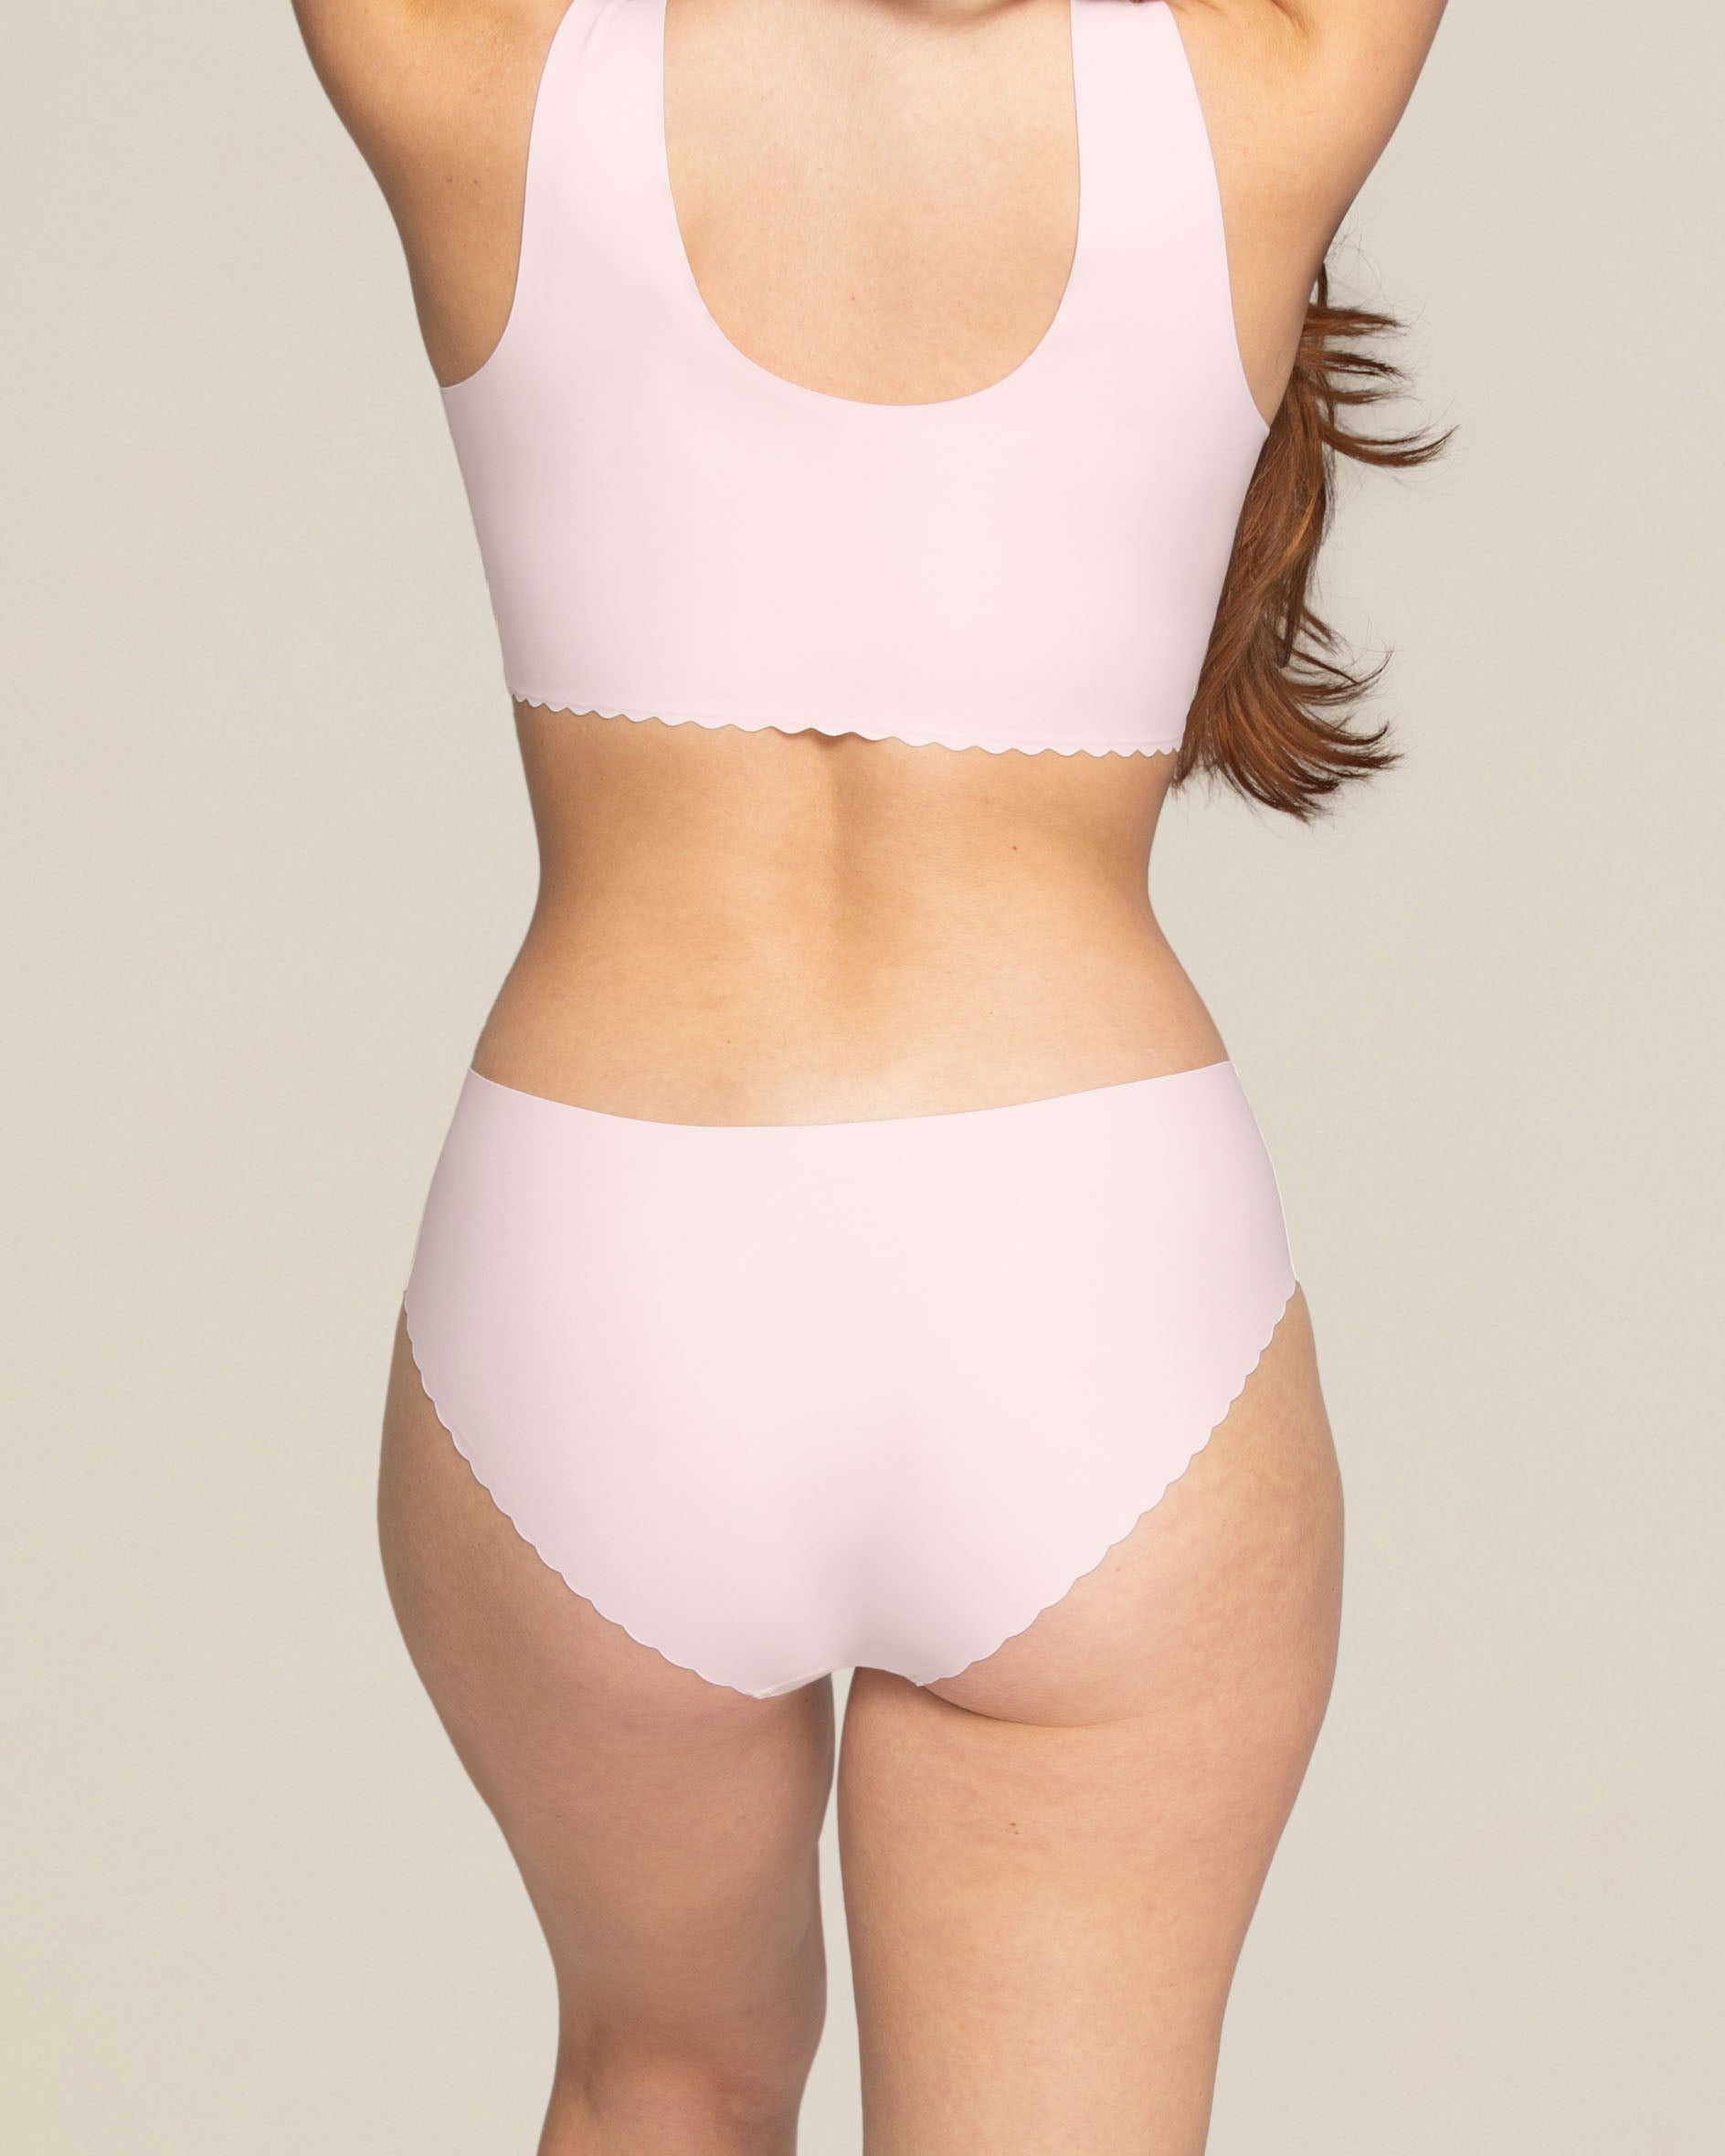 Women's Cotton Modal High-Leg Brief Underwear in Light Pink Nude size Small